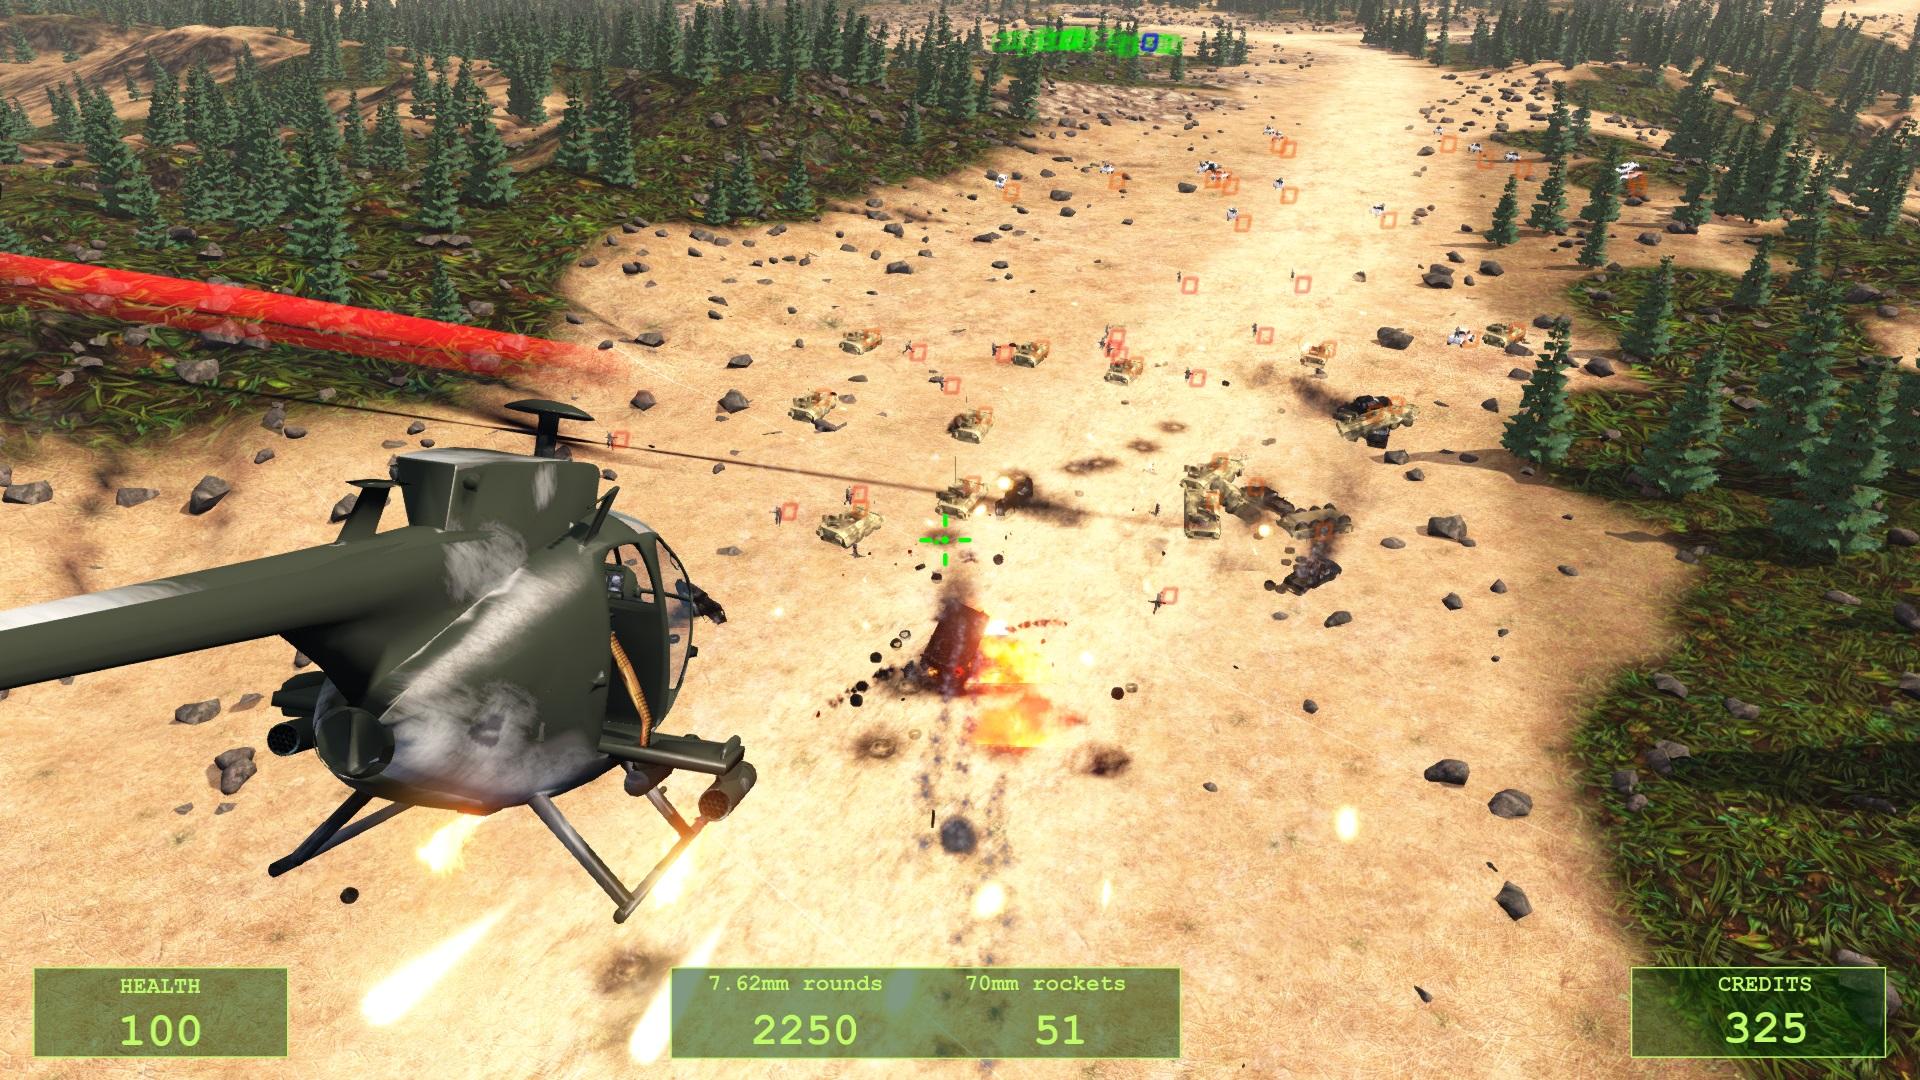 Screenshot №5 from game Aerial Destruction